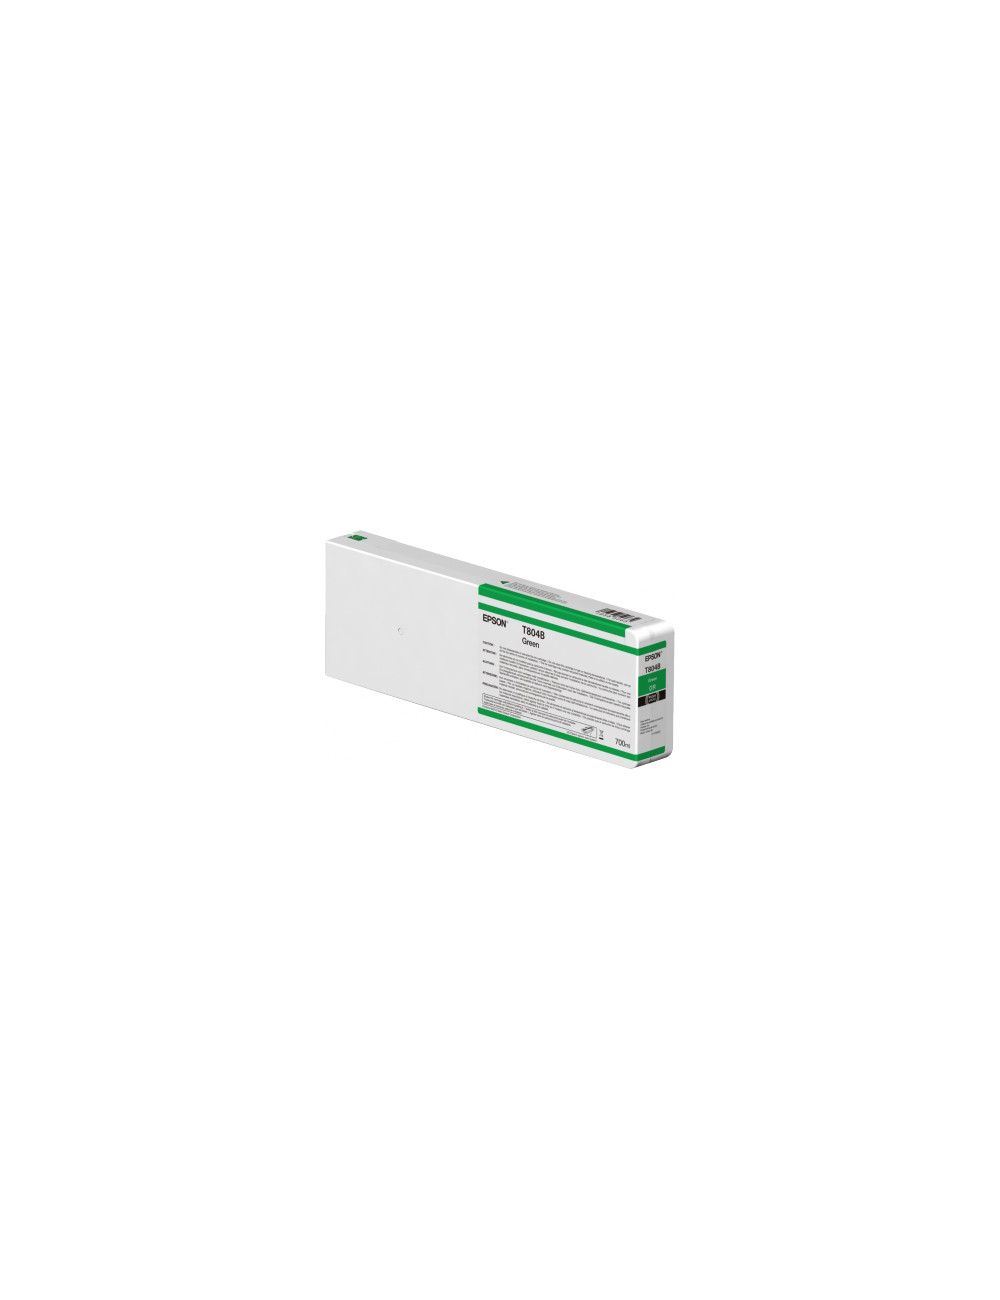 Epson T804B00 Ink Cartridge, Green